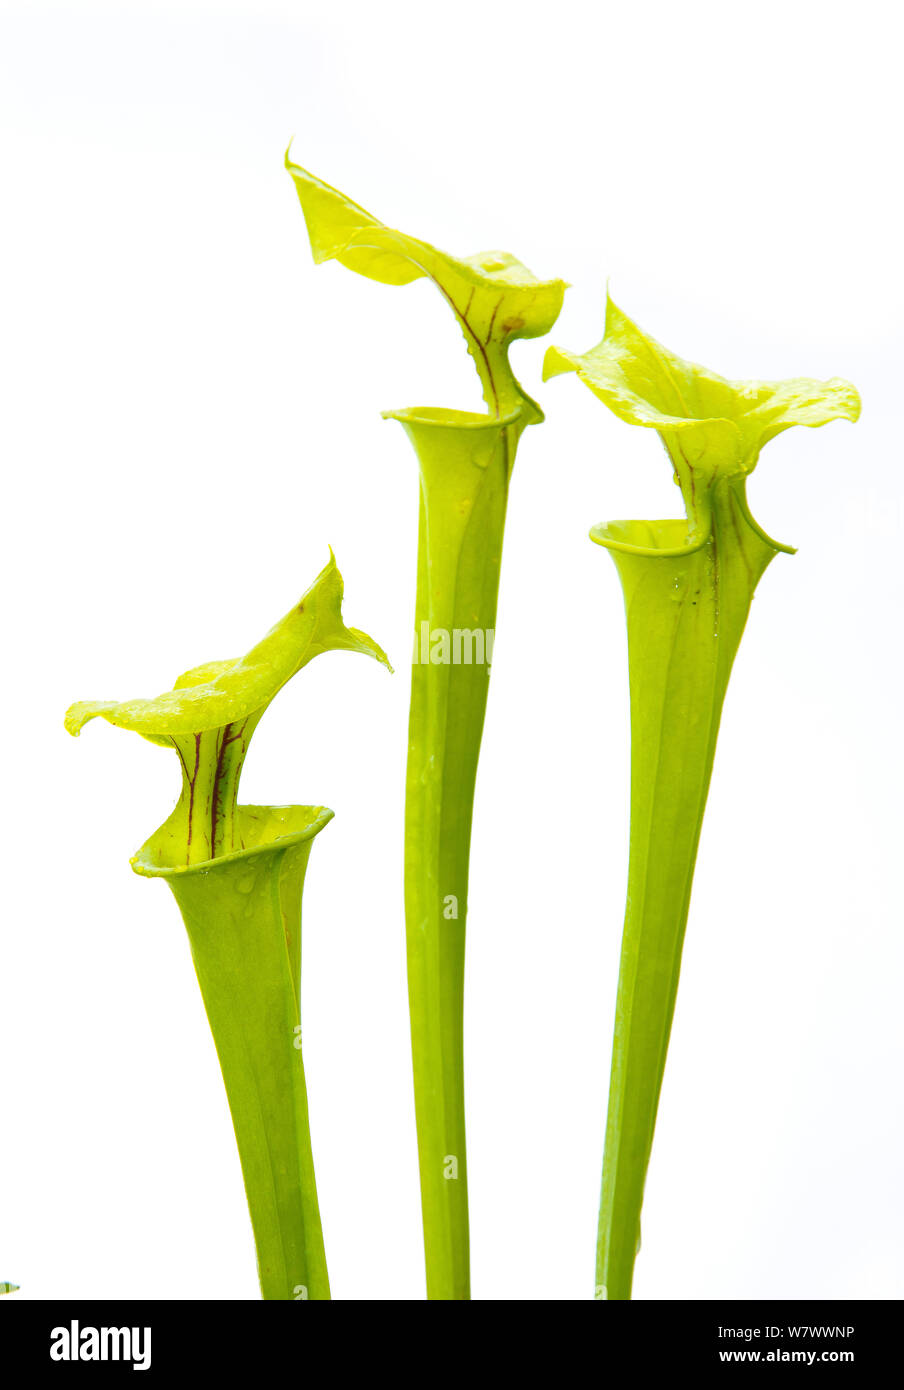 La sarracénie pourpre (Sarracenia jaune flava), Marais Vert préserver, North Carolina, USA, juin. Meetyourneighbors.net projet. Banque D'Images